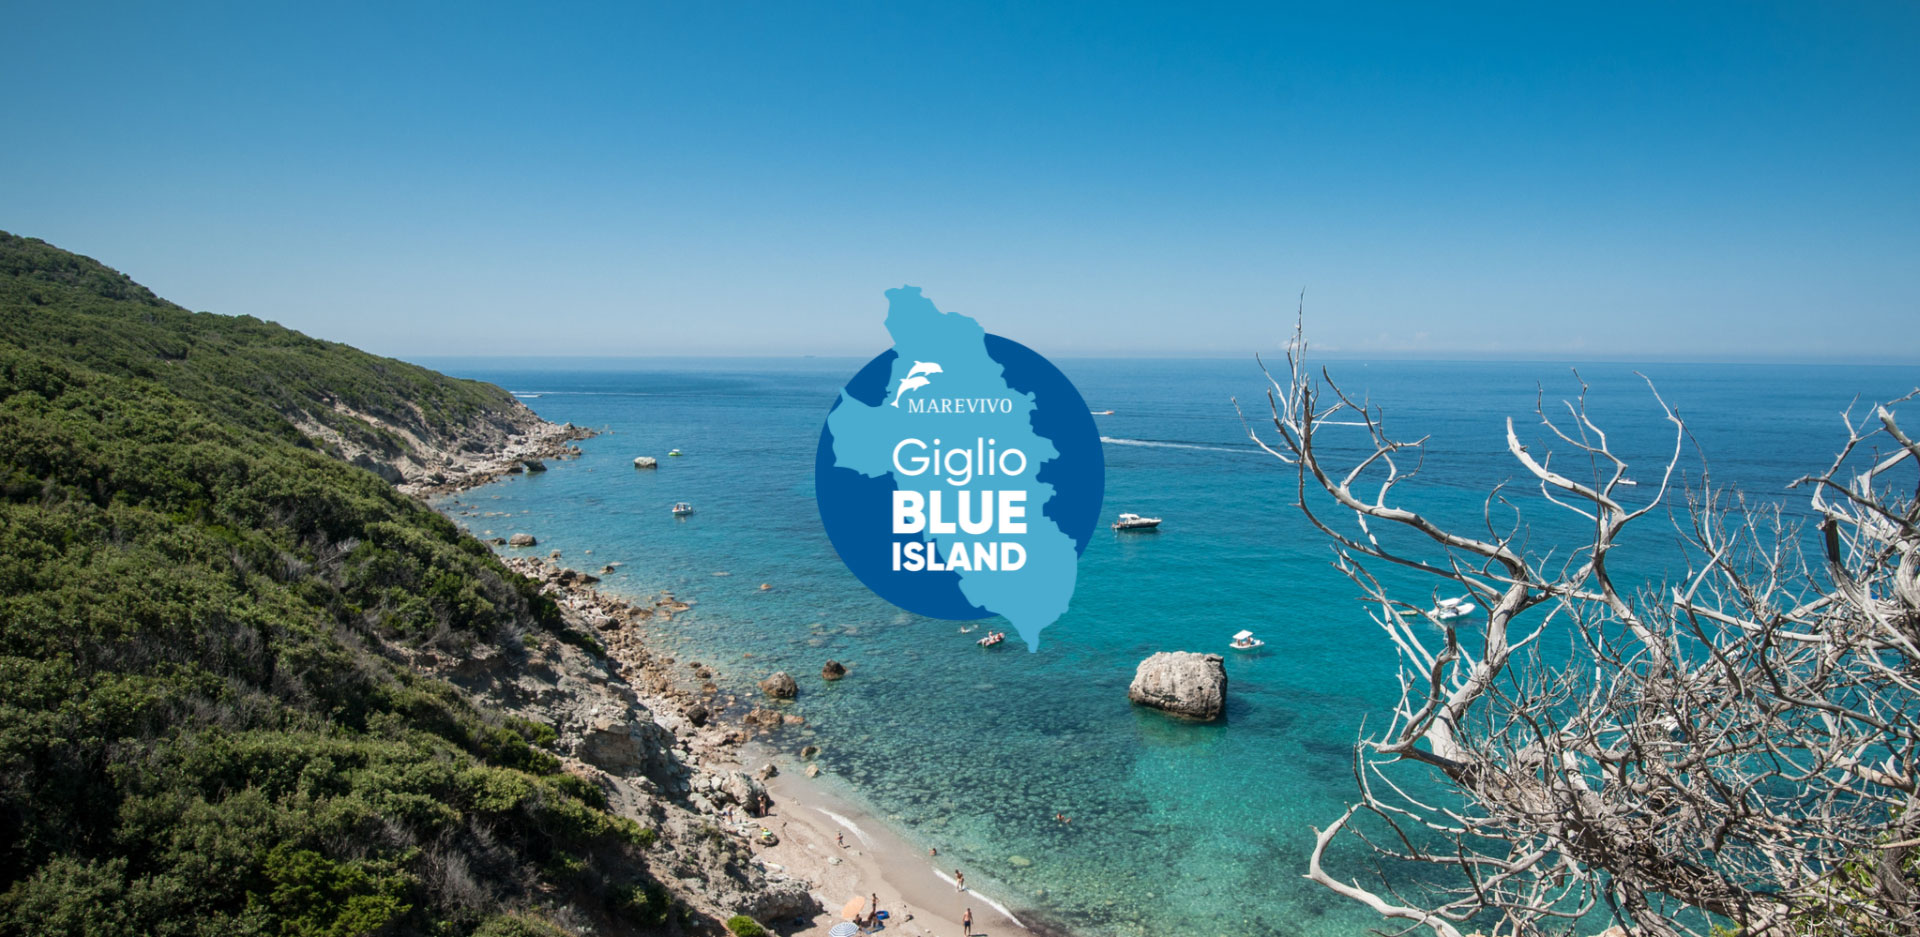 Giglio Blue Island